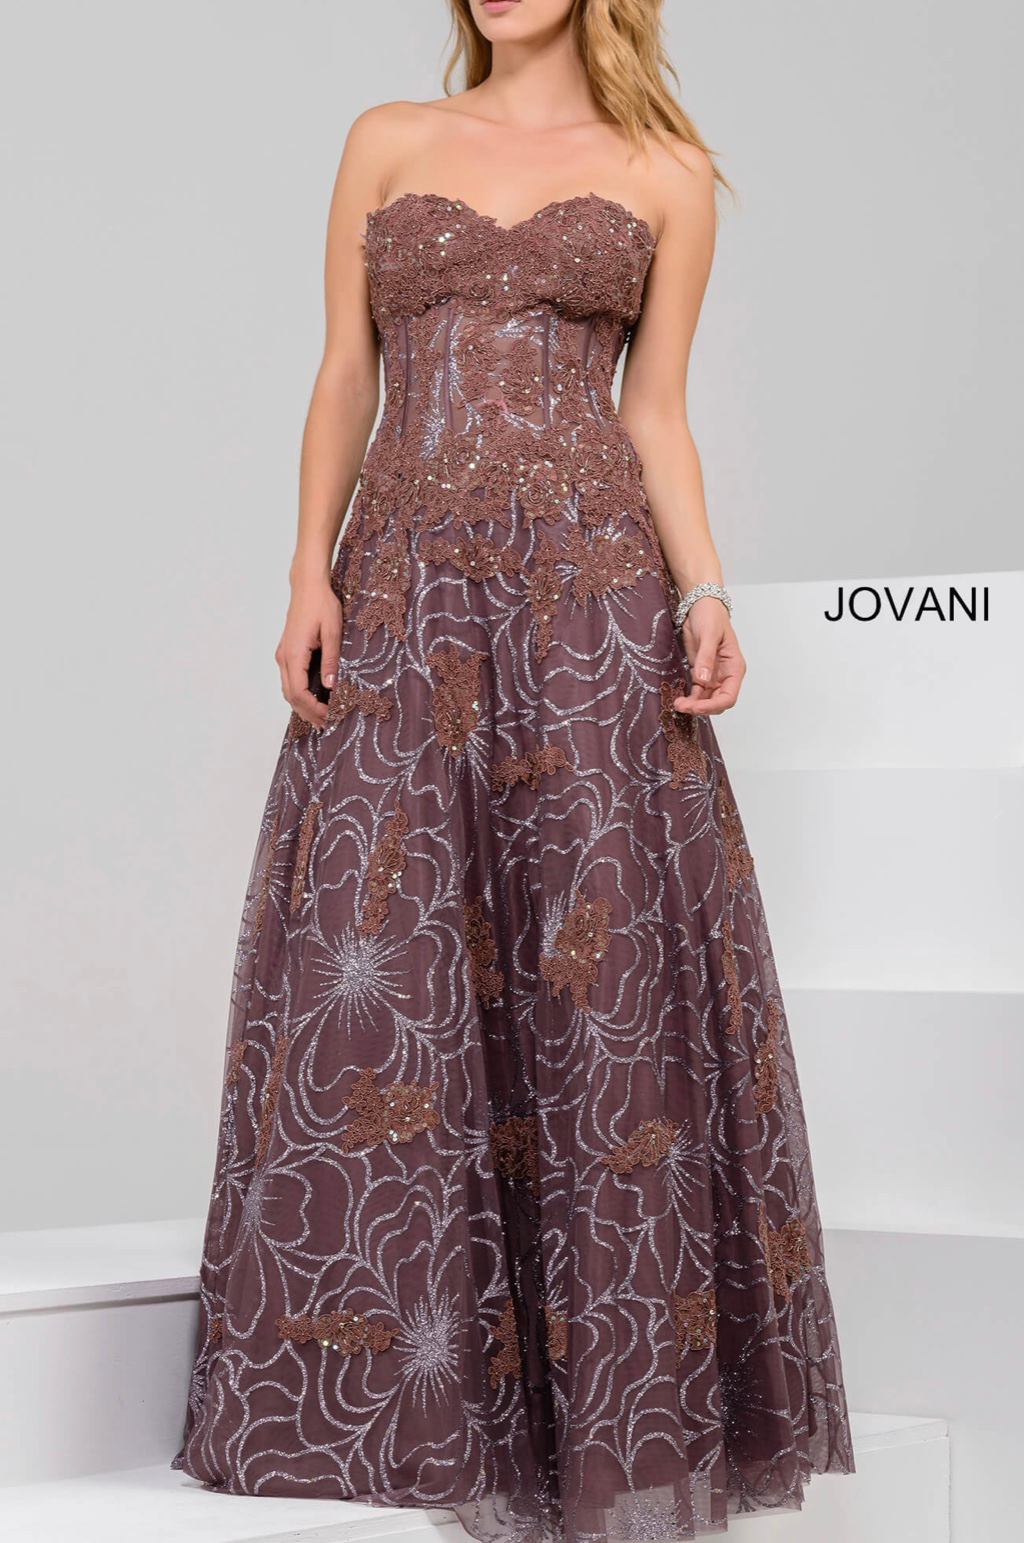 JOVANI 14913 STRAPLESS SWEETHEART DRESS